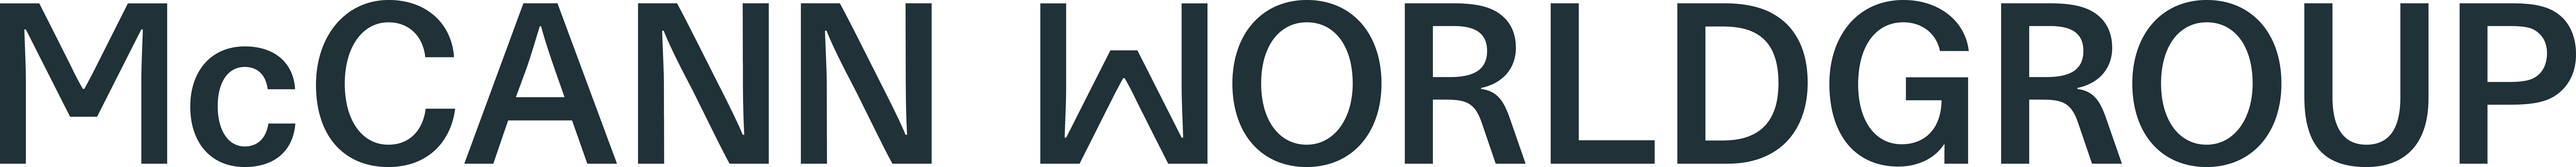 mccann-worldgroup-logo-off